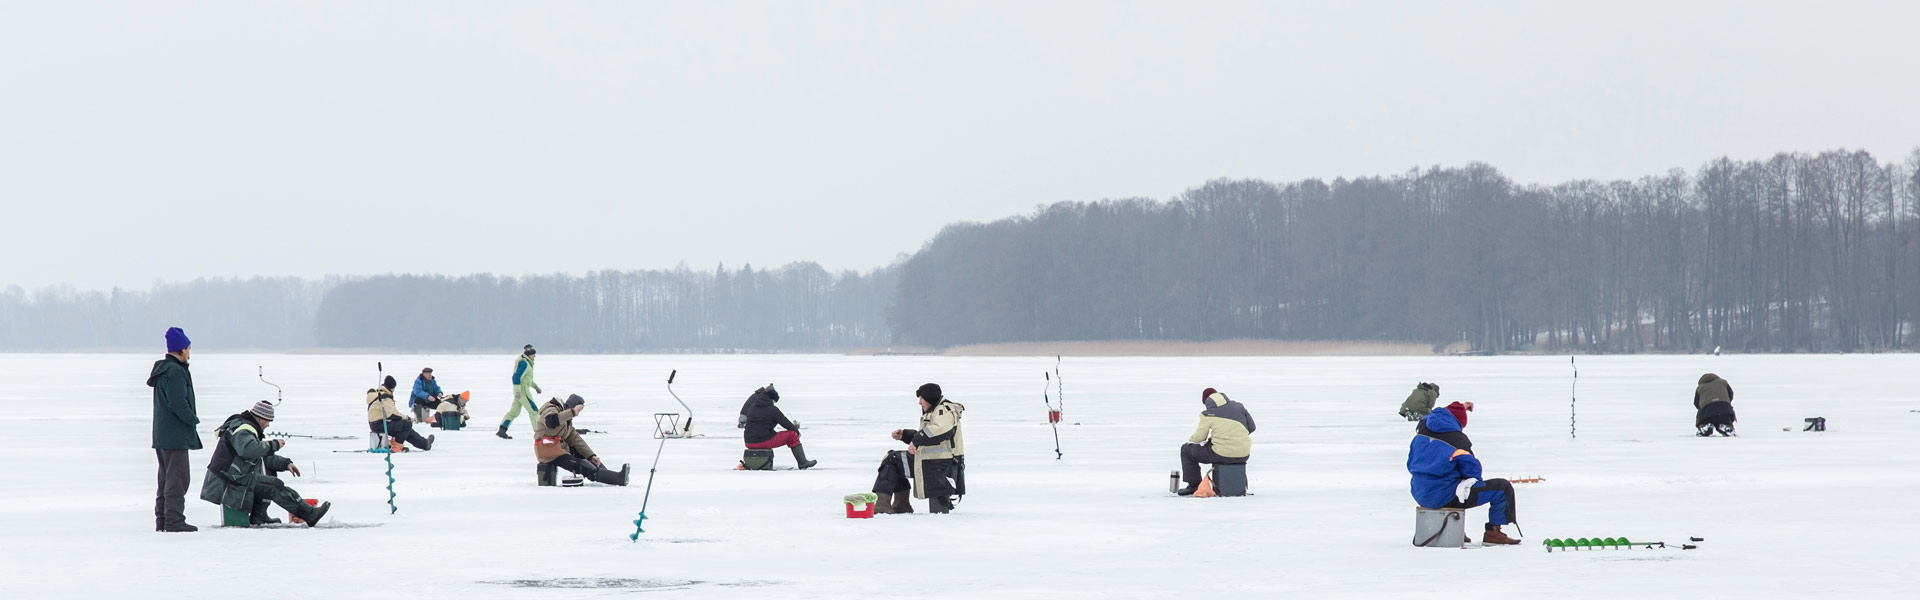 Ice fishing on small lake